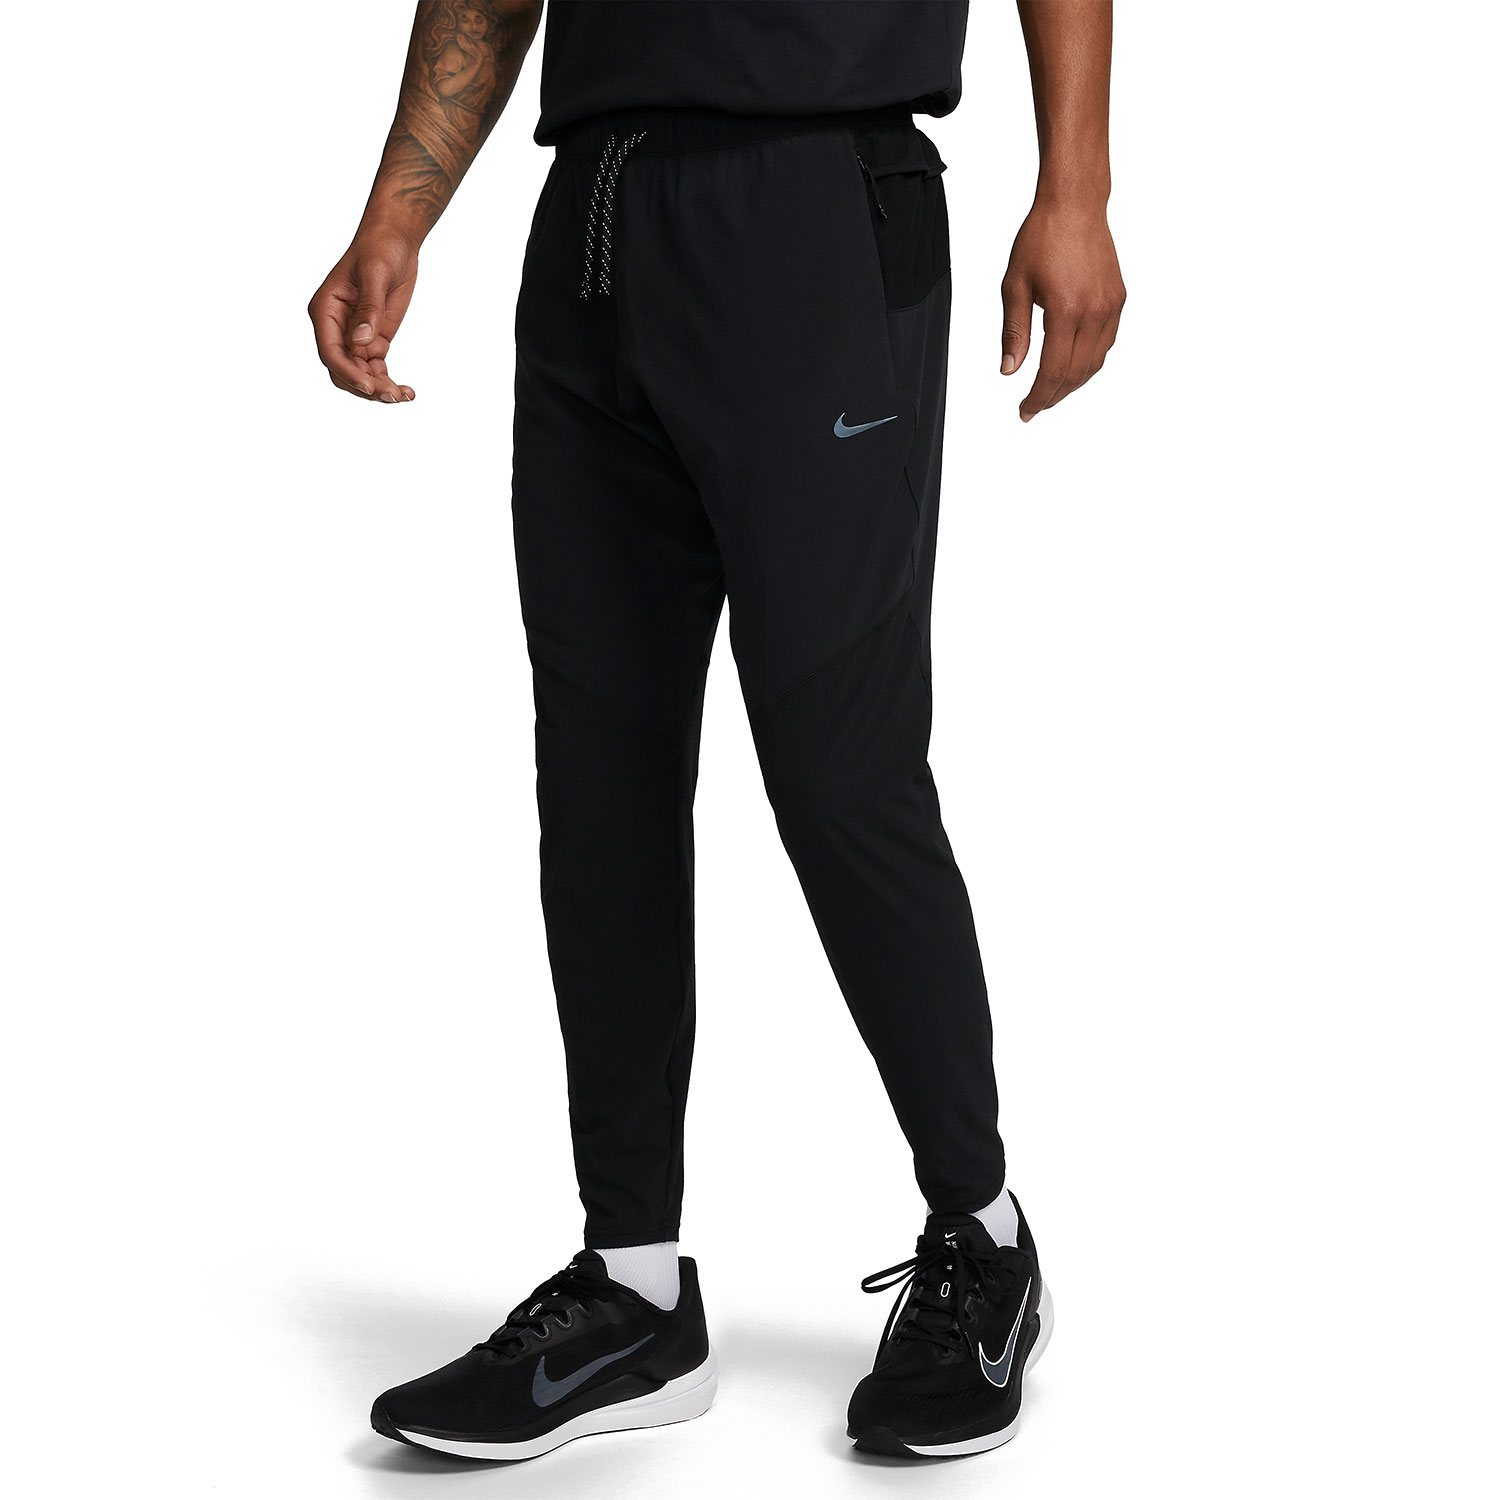 Nike Dri Fit Challenger Tight Black